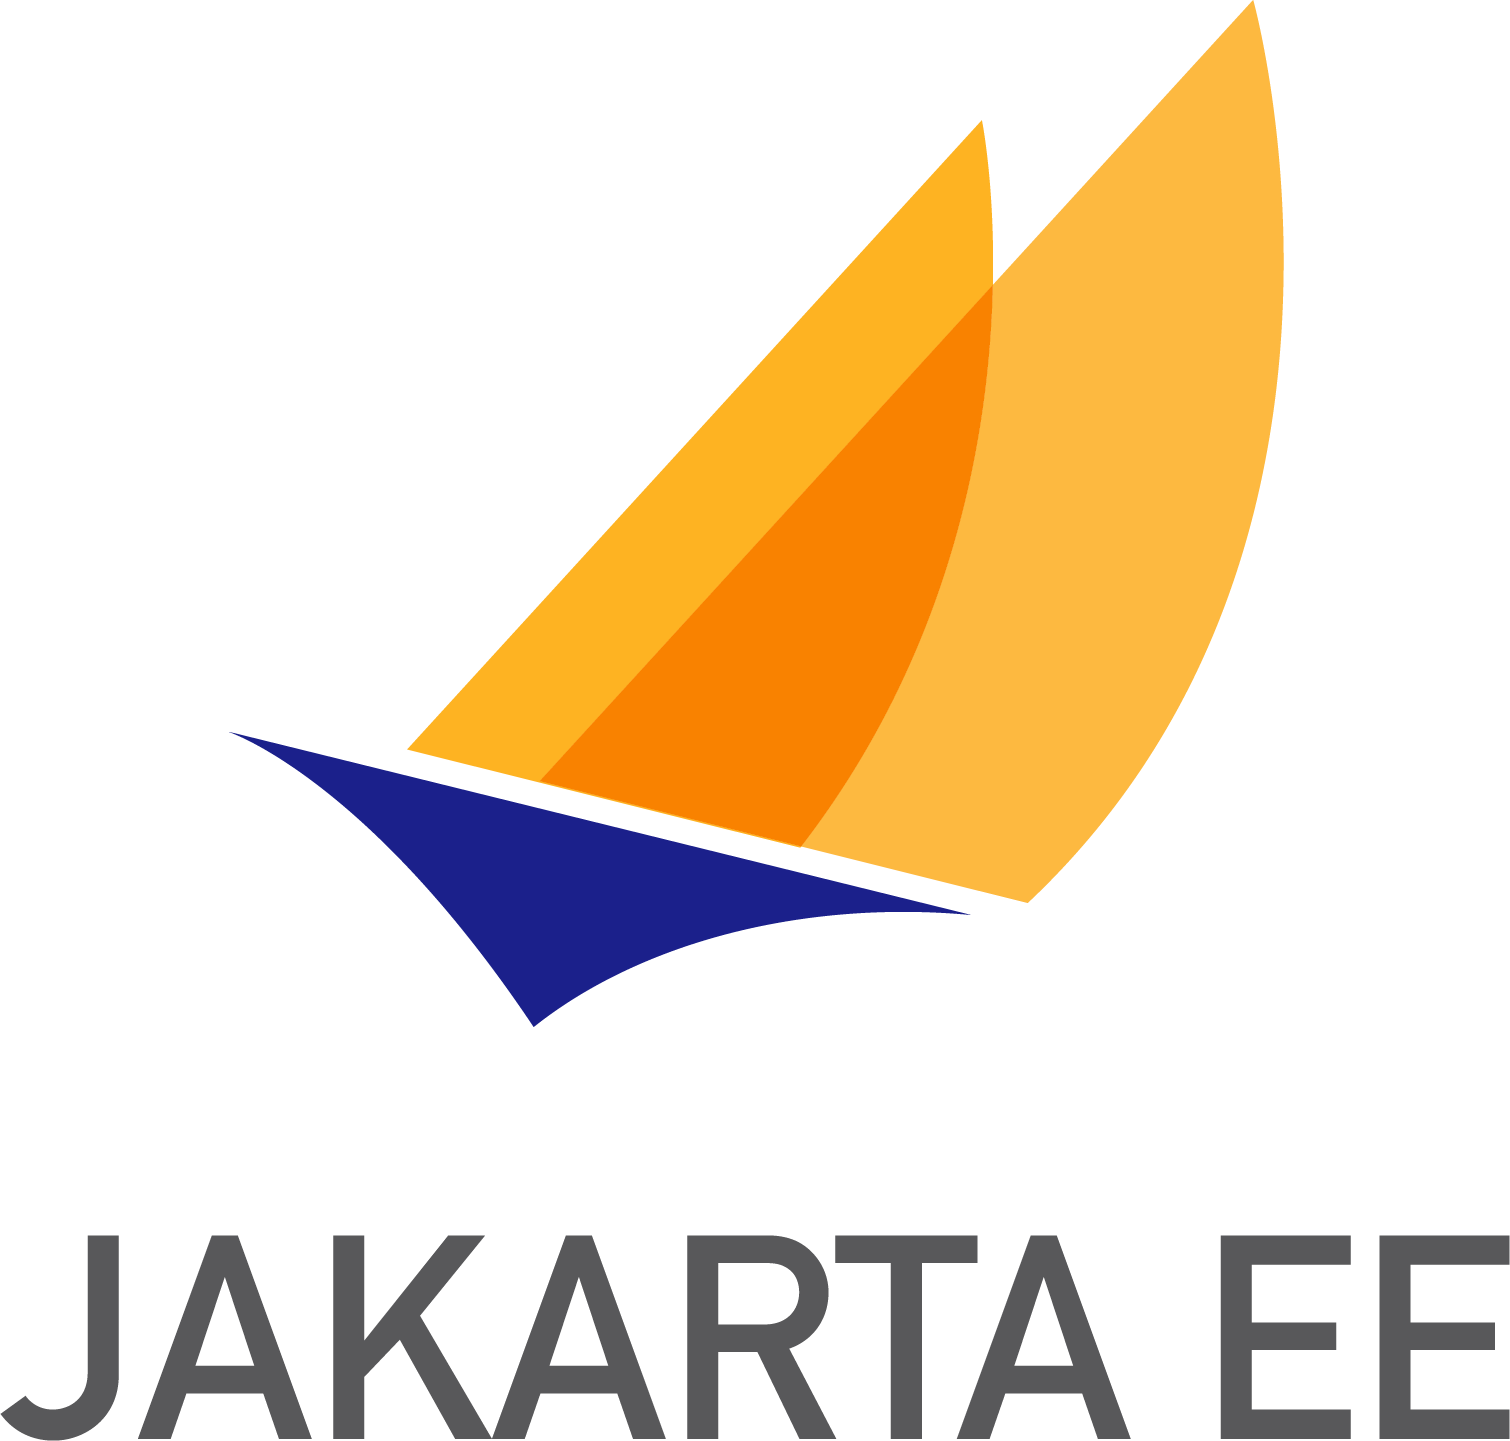 Ee Logo - Jakarta EE is officially out - Red Hat Developer Blog